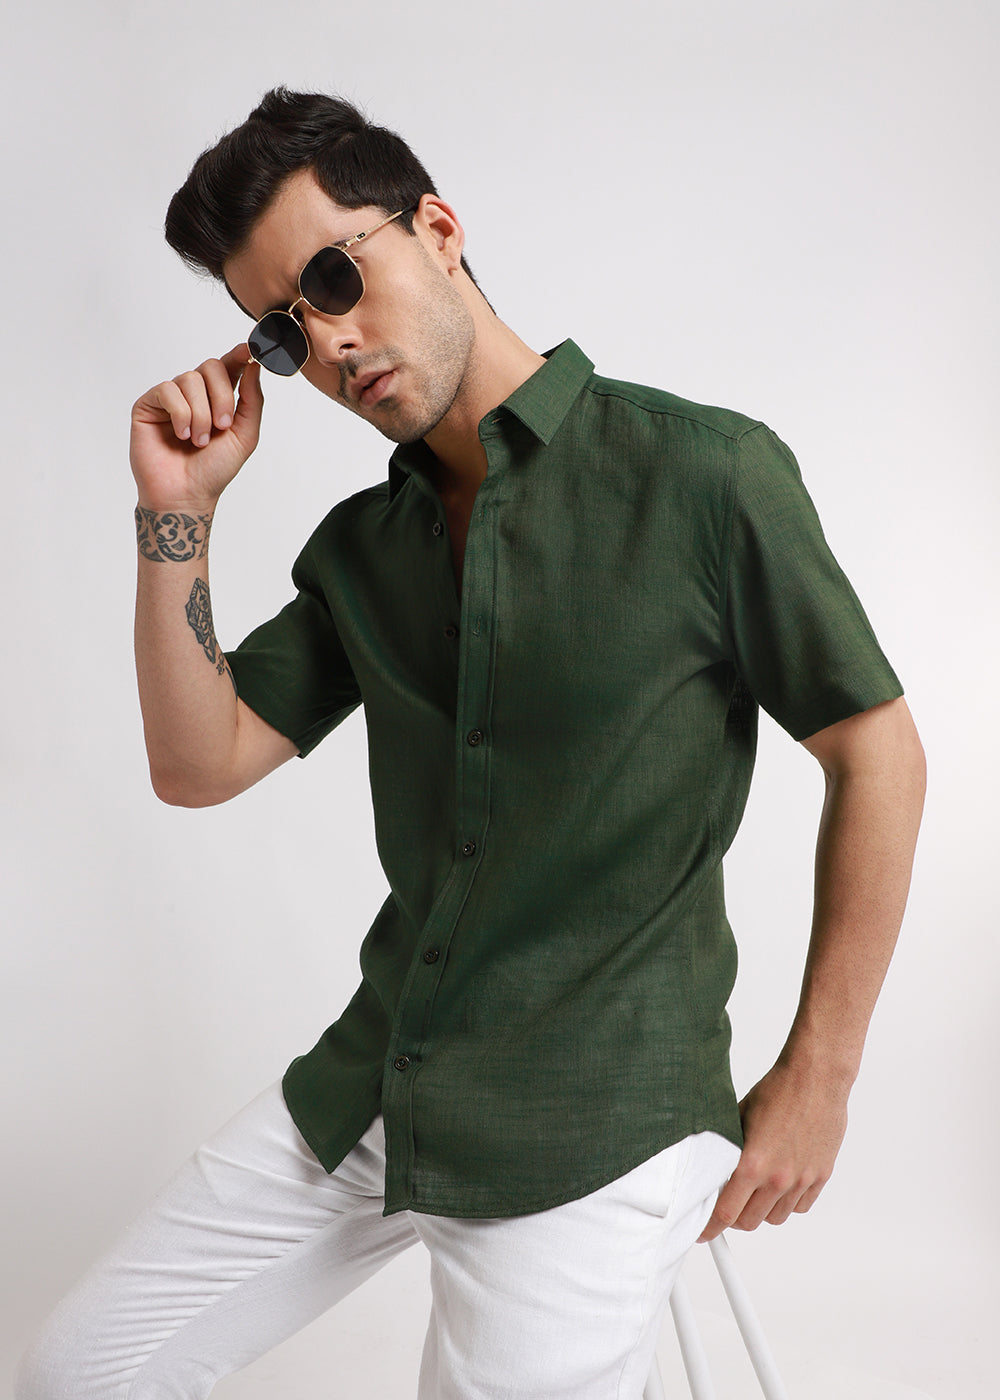 Buy Batiste Green Linen shirts